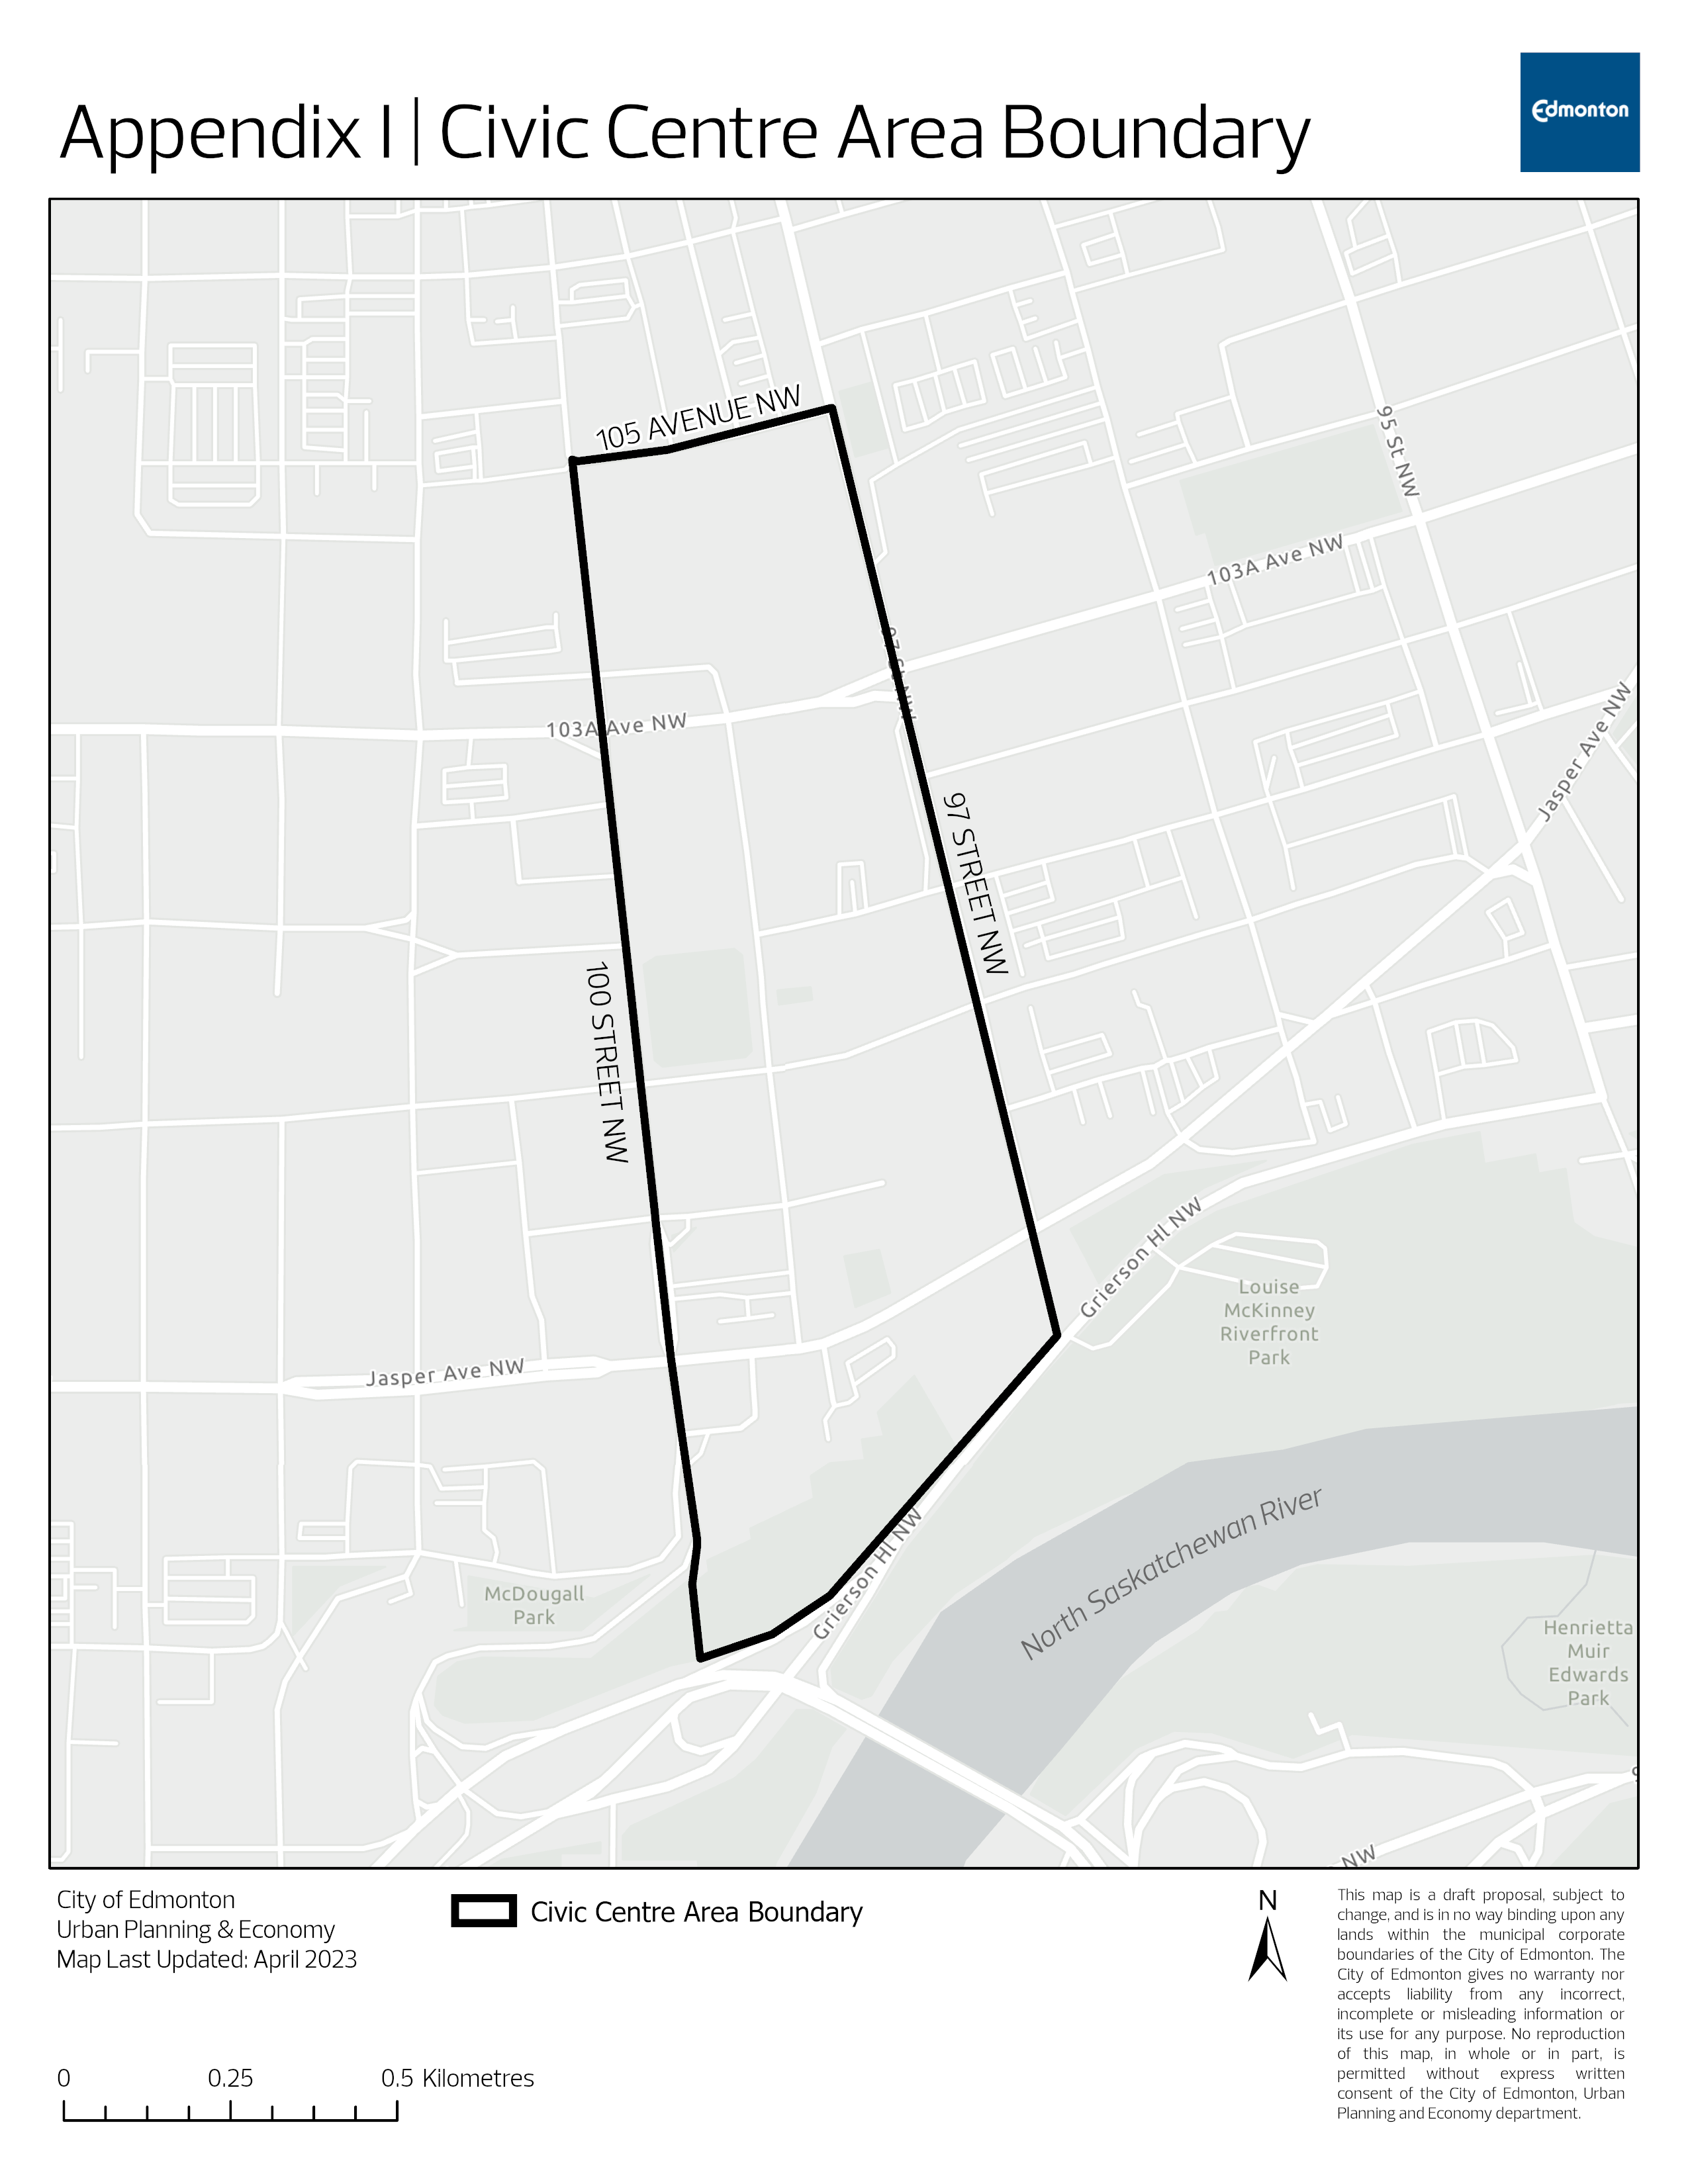 Civic Centre Area boundary map